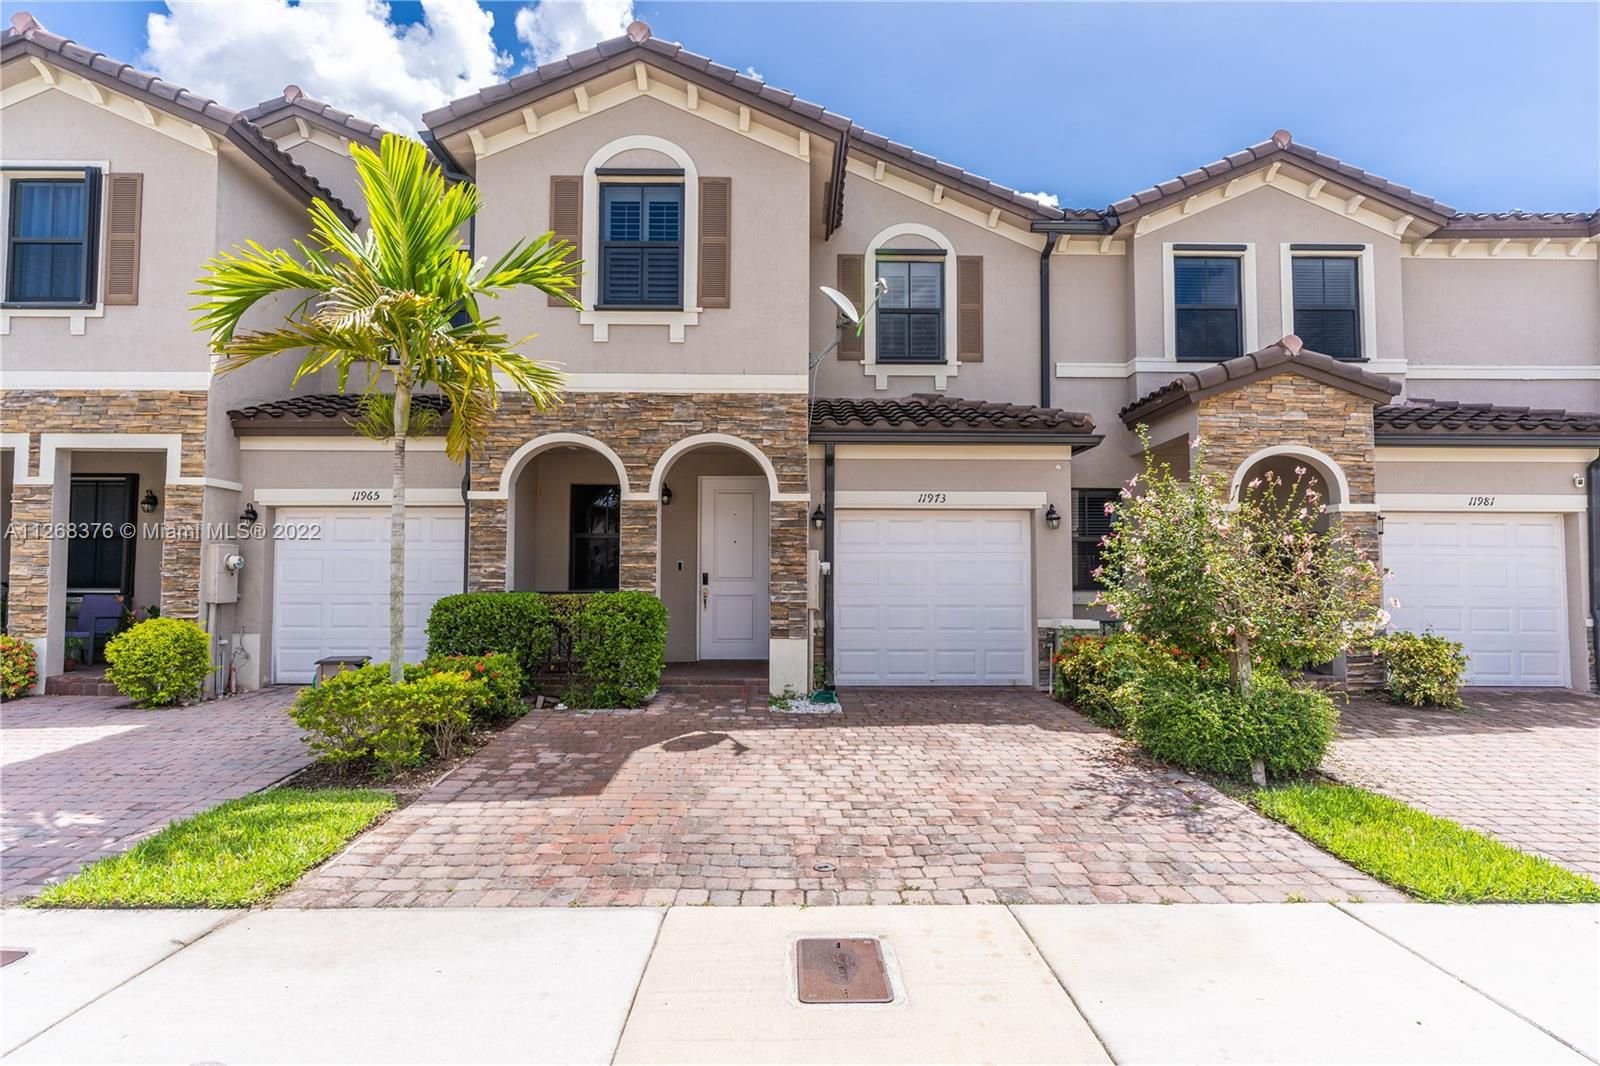 Real estate property located at 11973 150th Pl #0, Miami-Dade County, Miami, FL